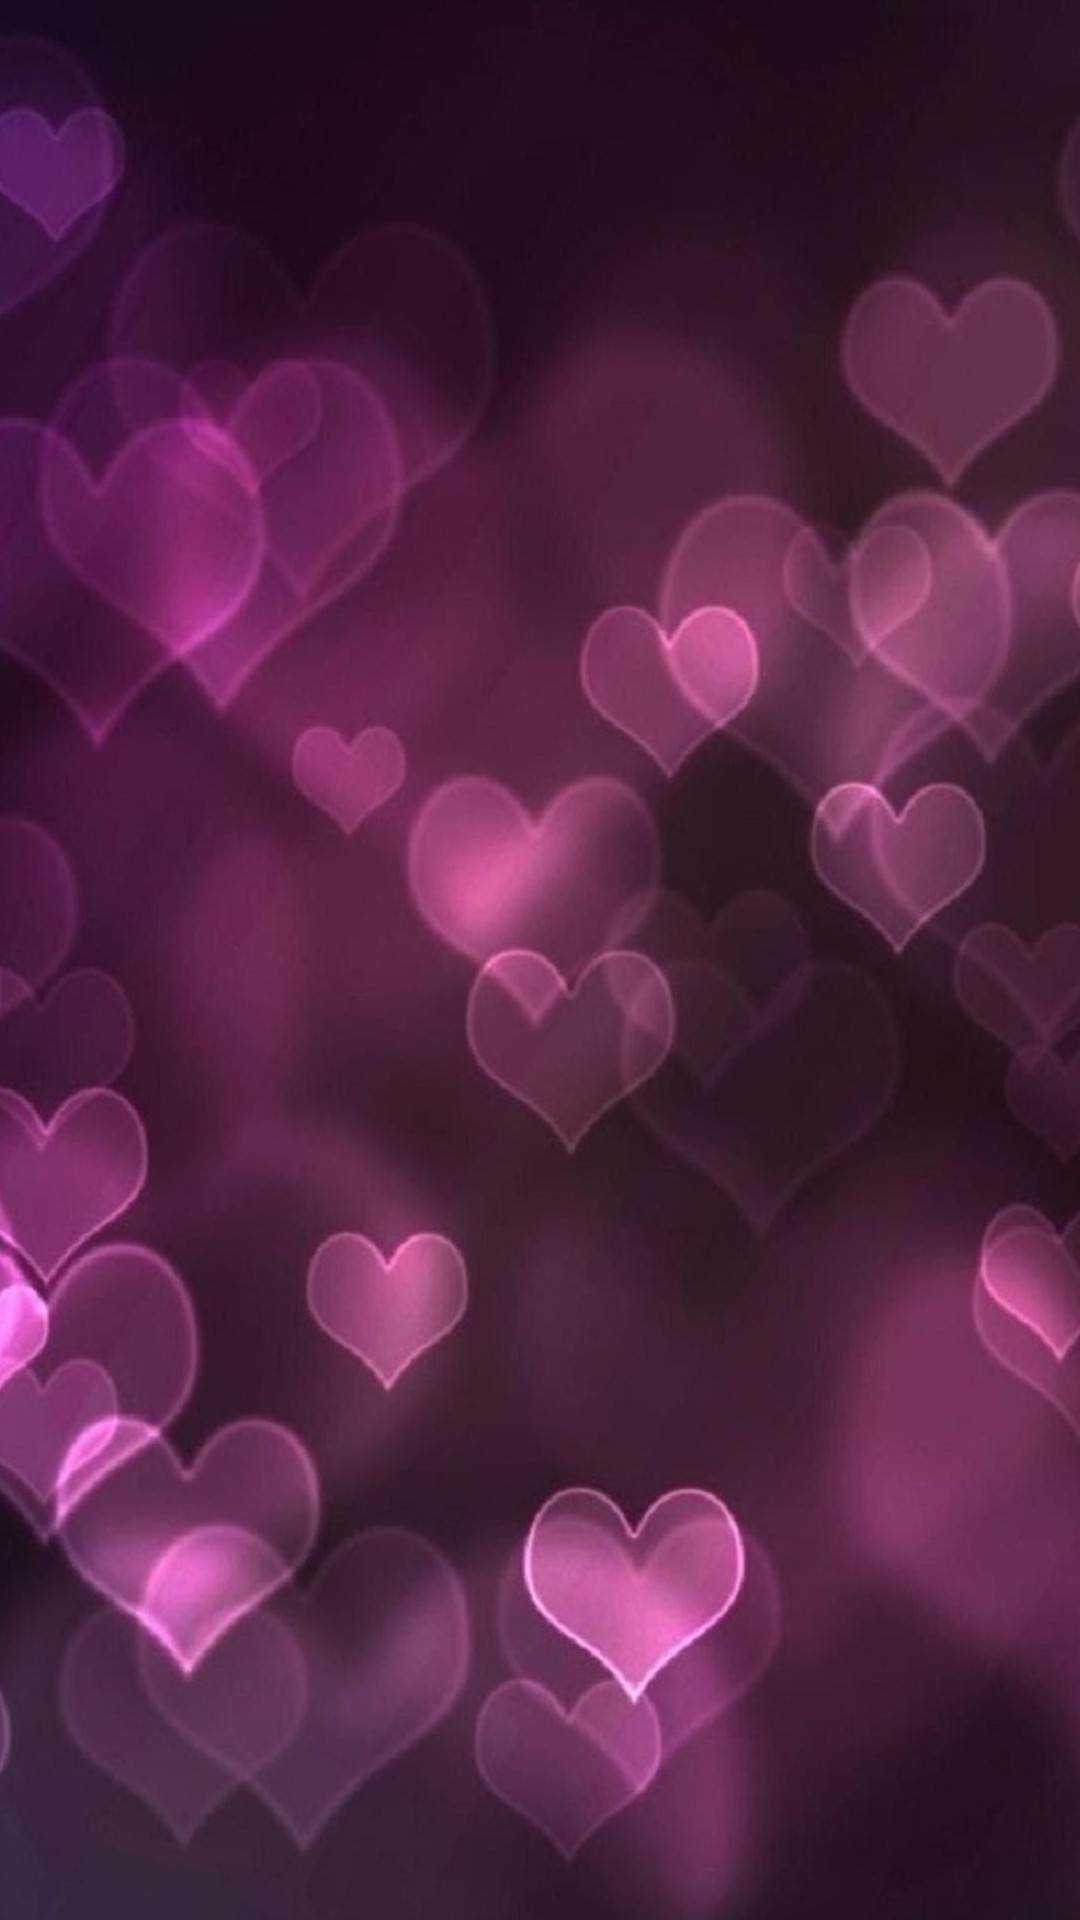 1080x1920 Pink Hearts Galaxy S4 Wallpaper ()